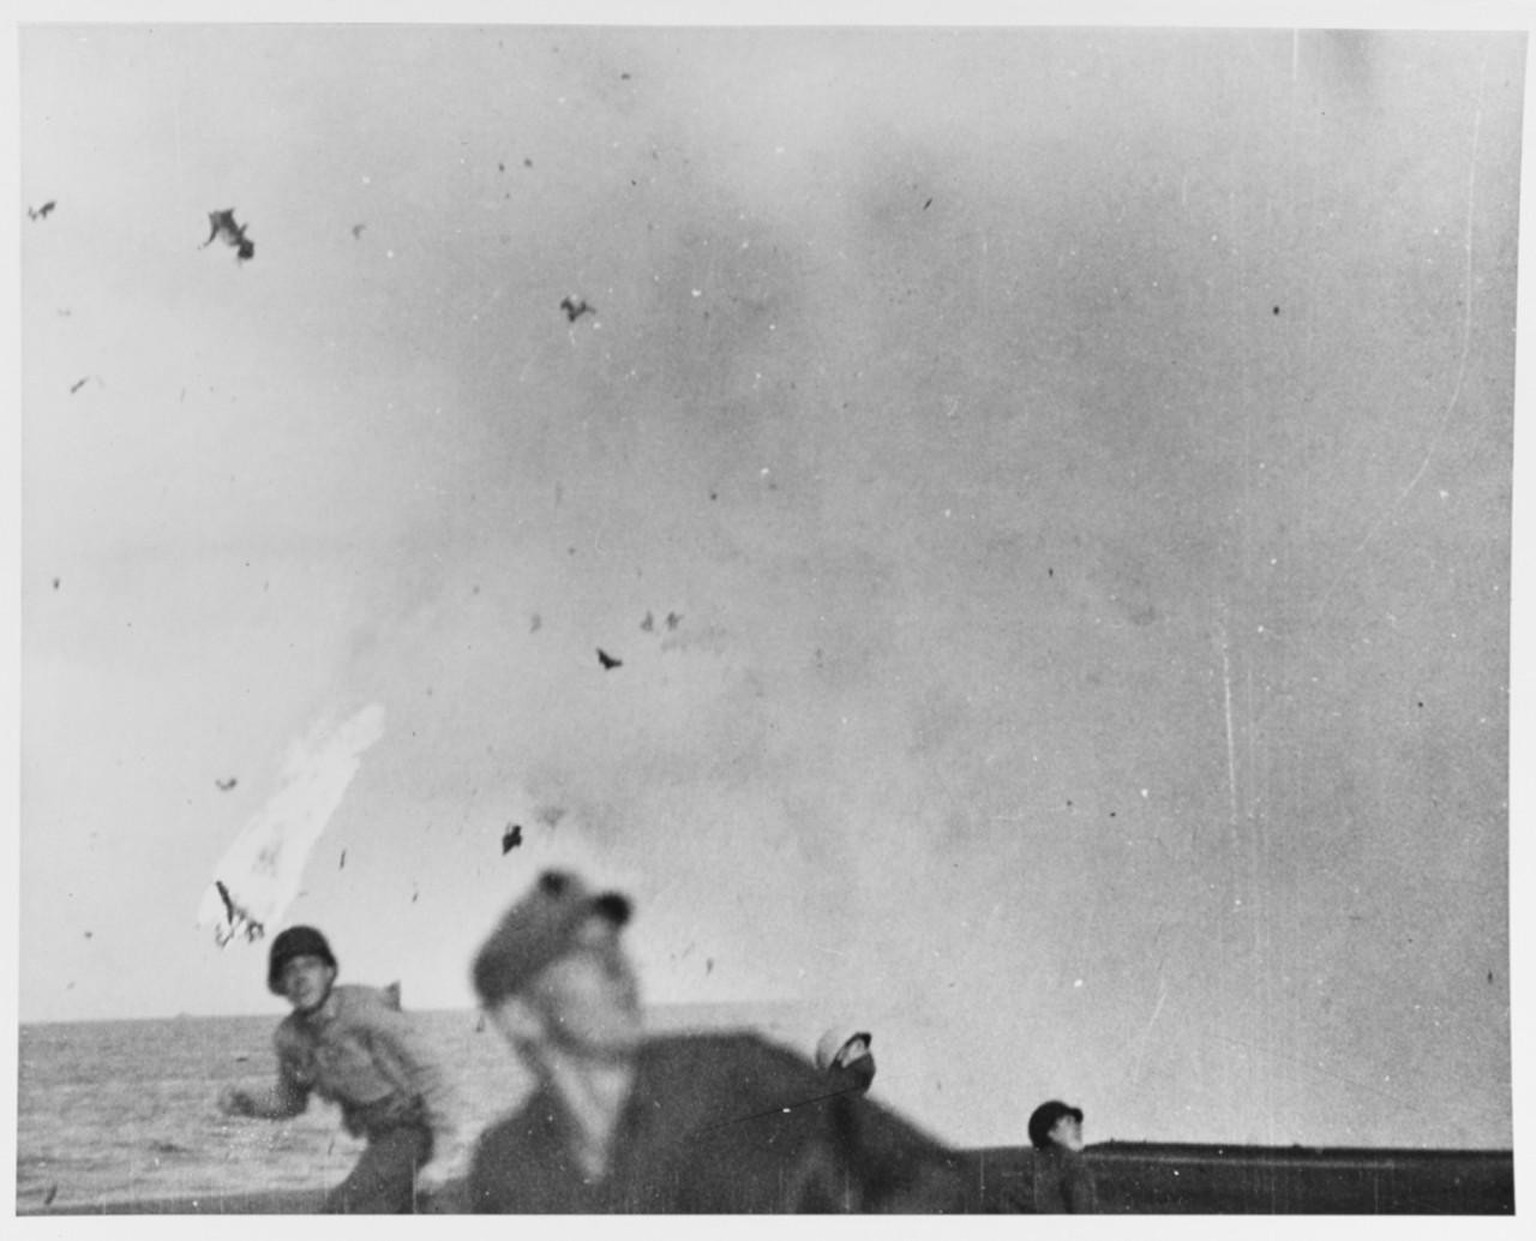 Crew of the escort carrier USS Marcus Island (CVE-77) scramble as a flaming kamikaze streaks over the flight deck. 15 December 1944.